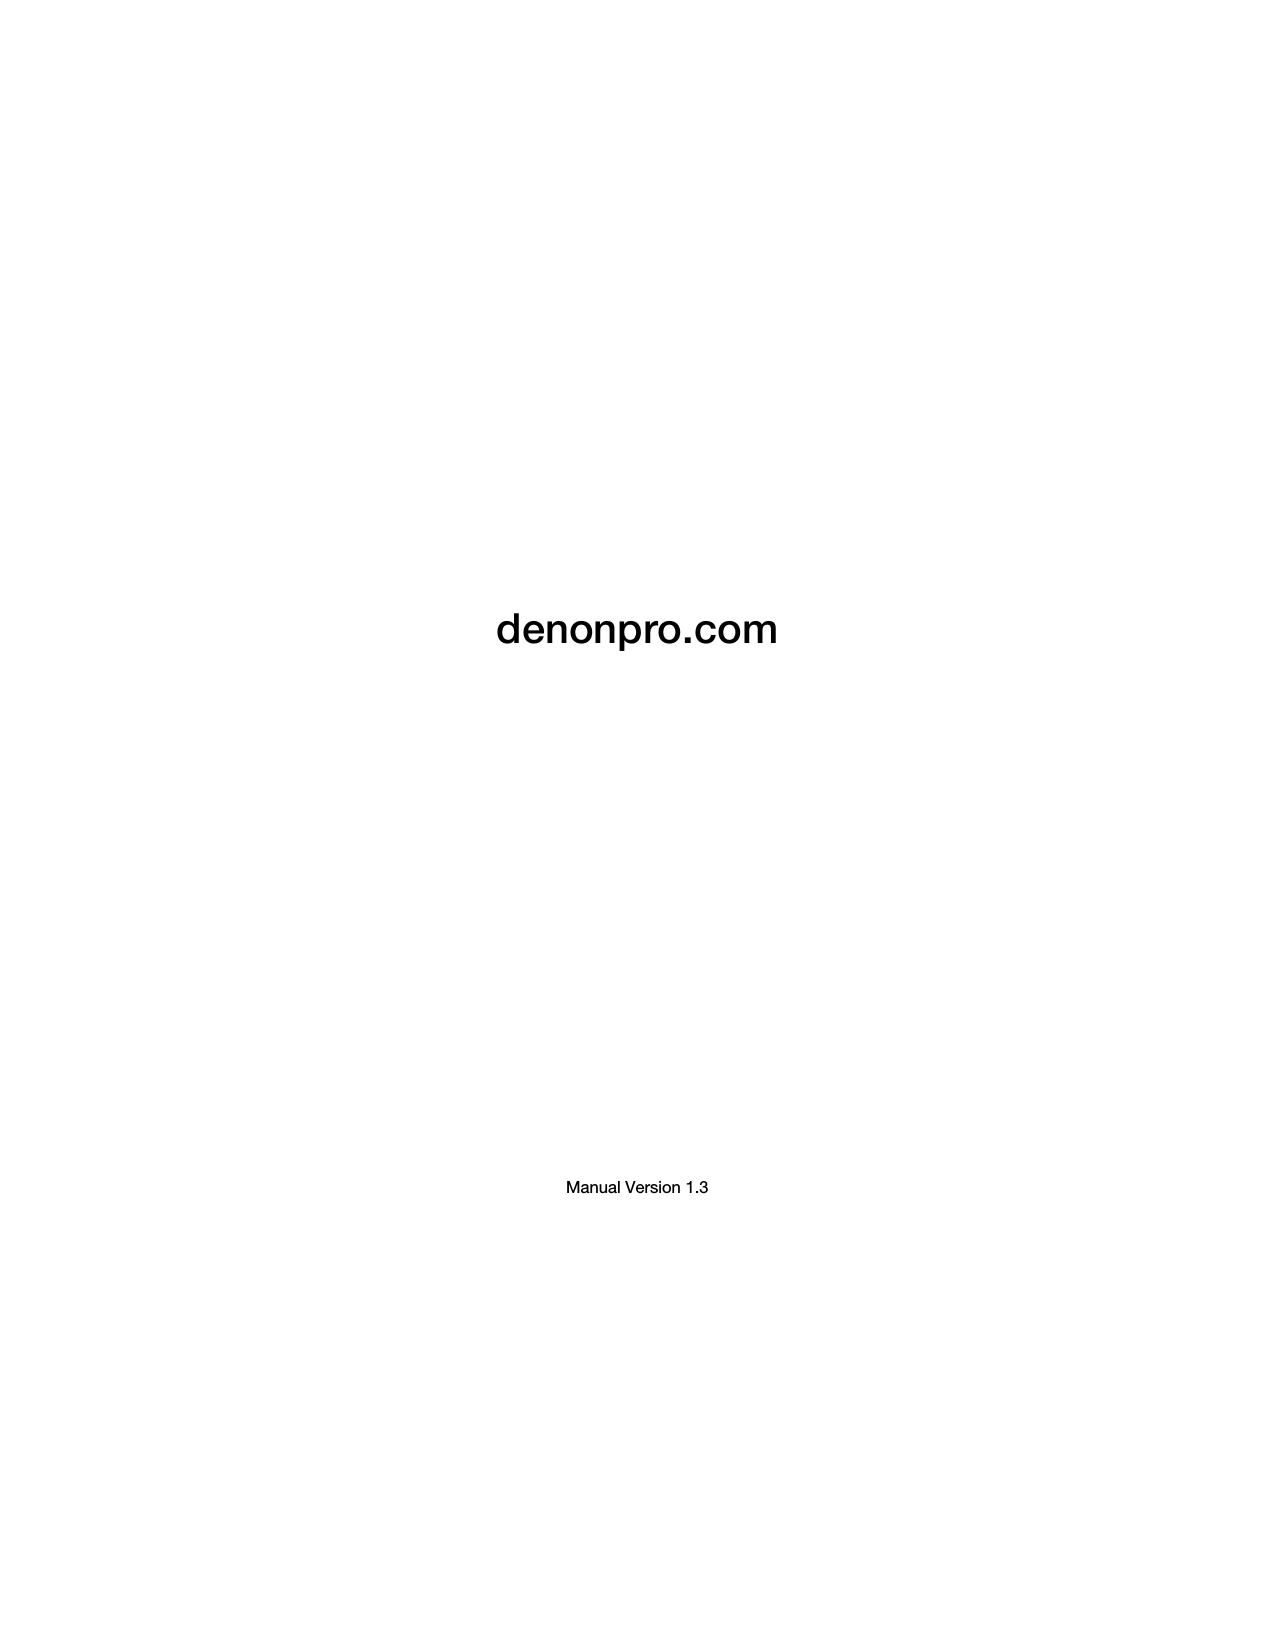                               denonpro.com                            Manual Version 1.3 